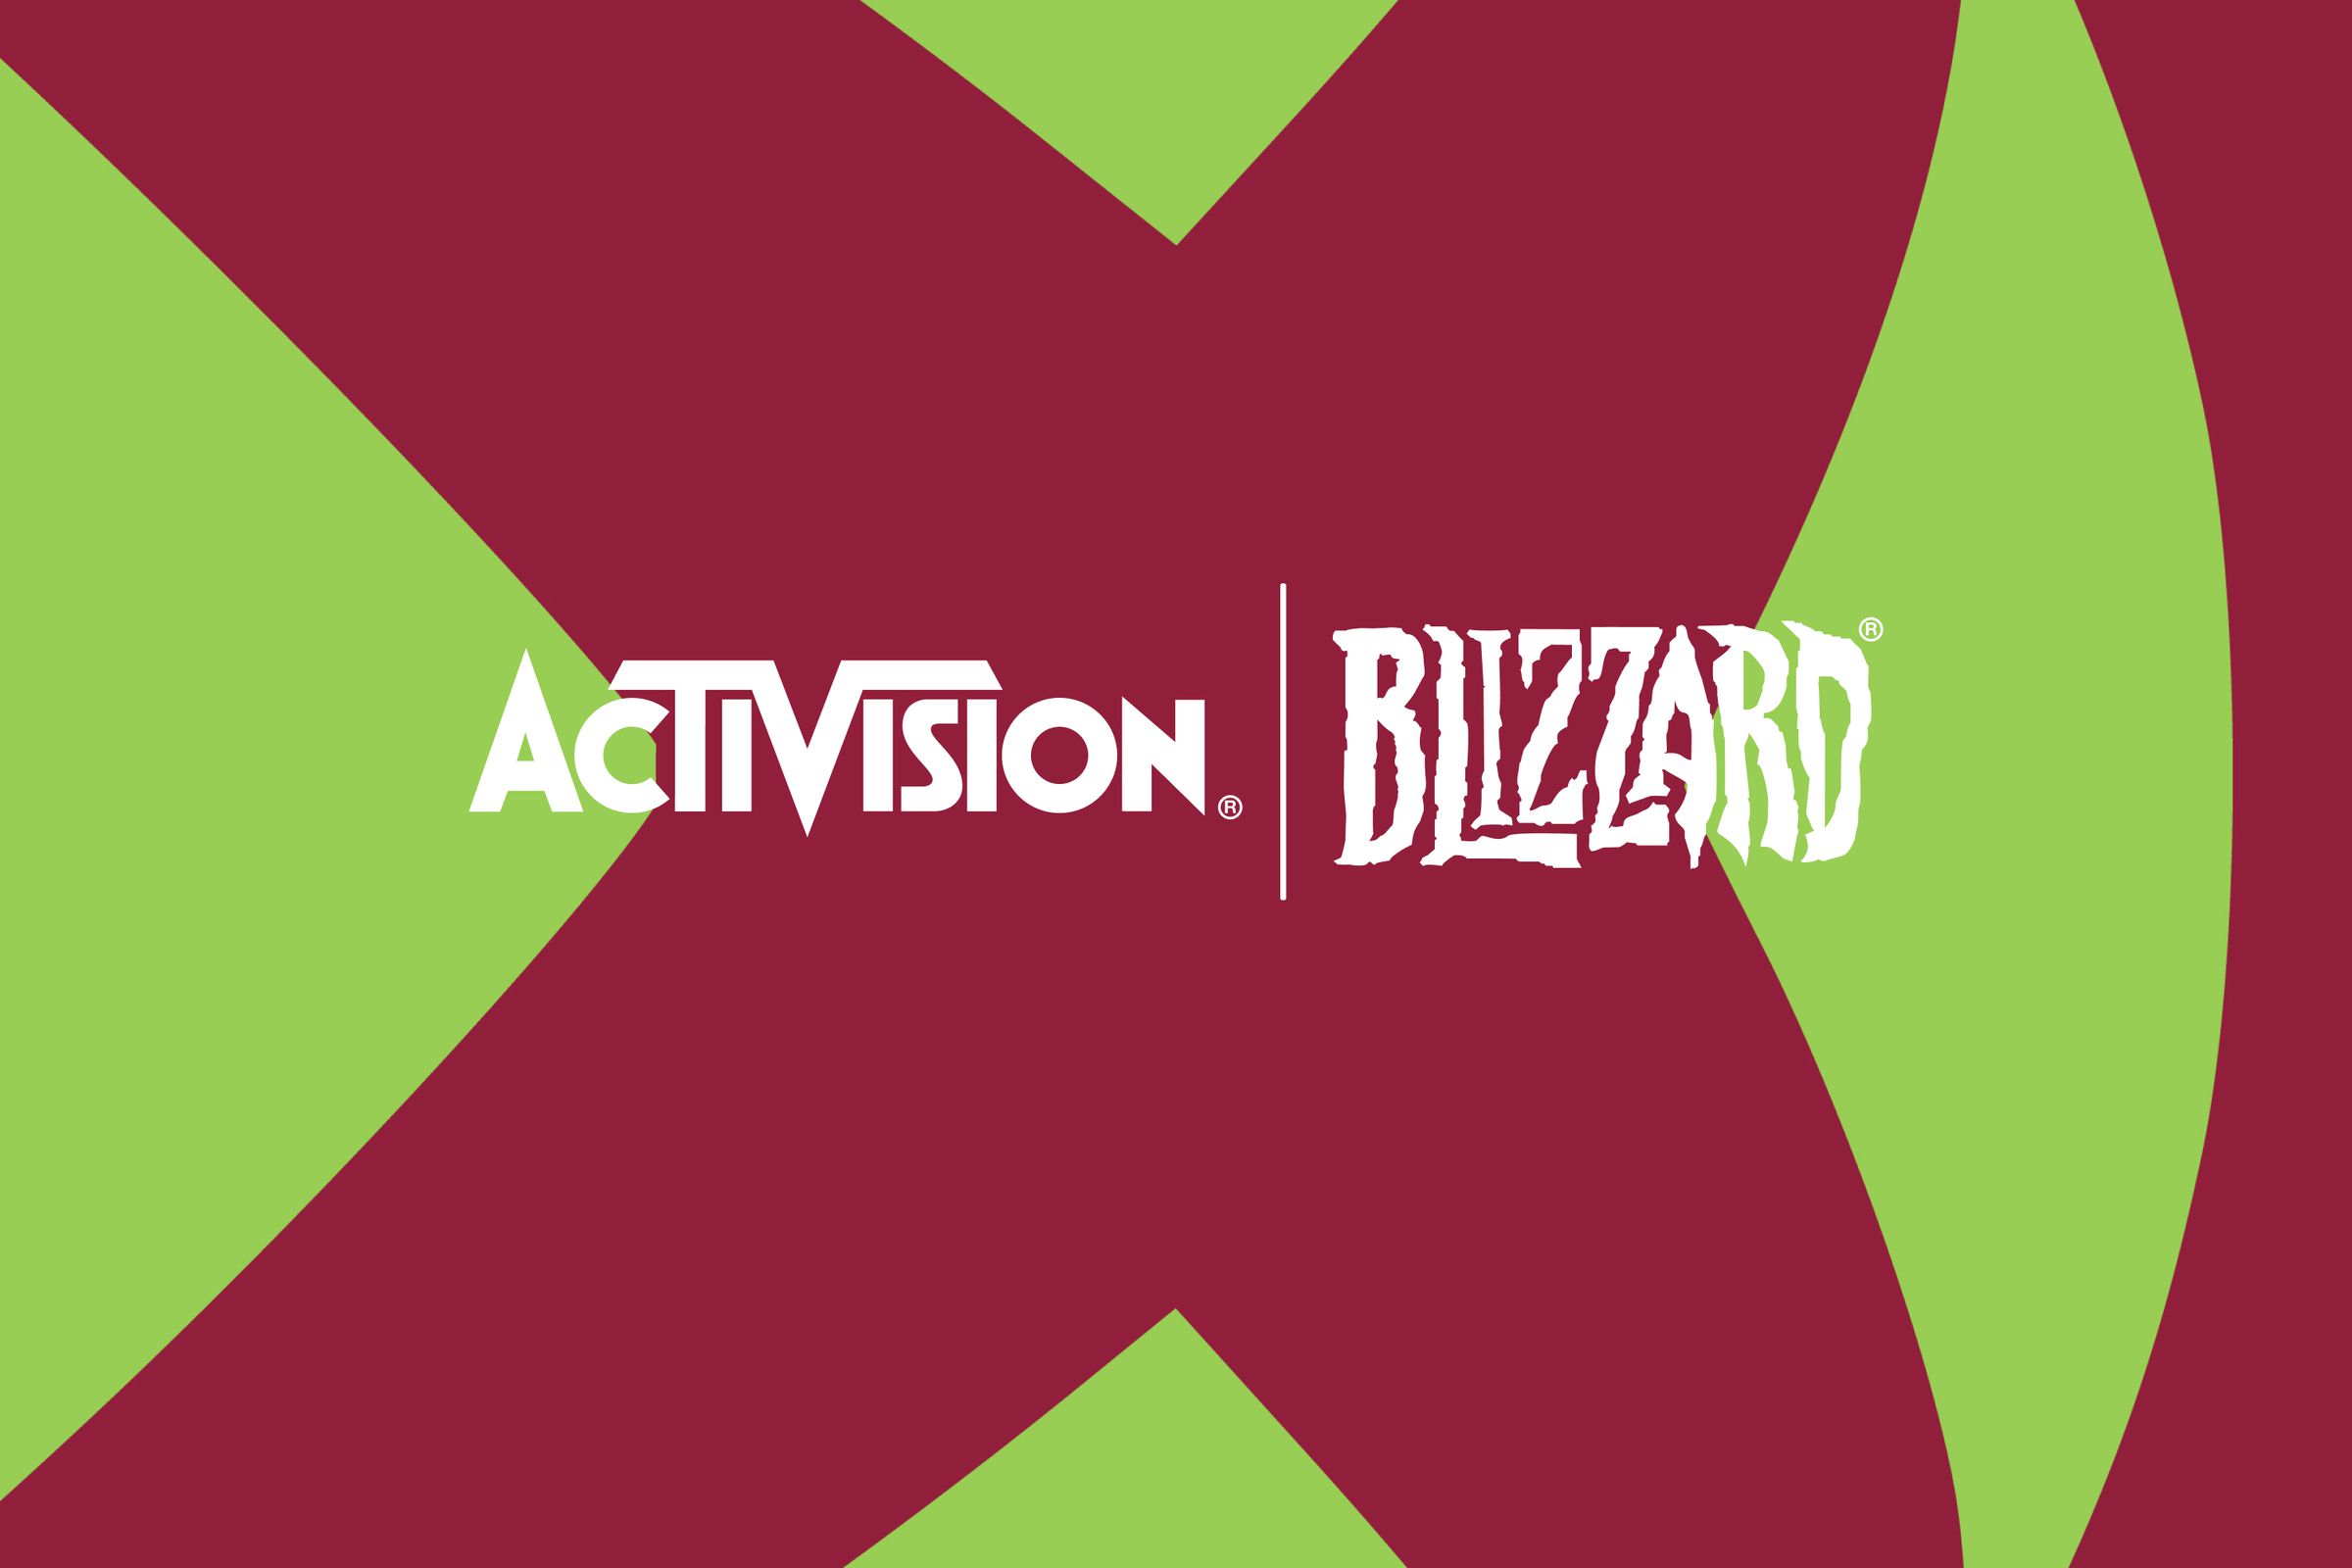 Illustration of the Activision Blizzard logo